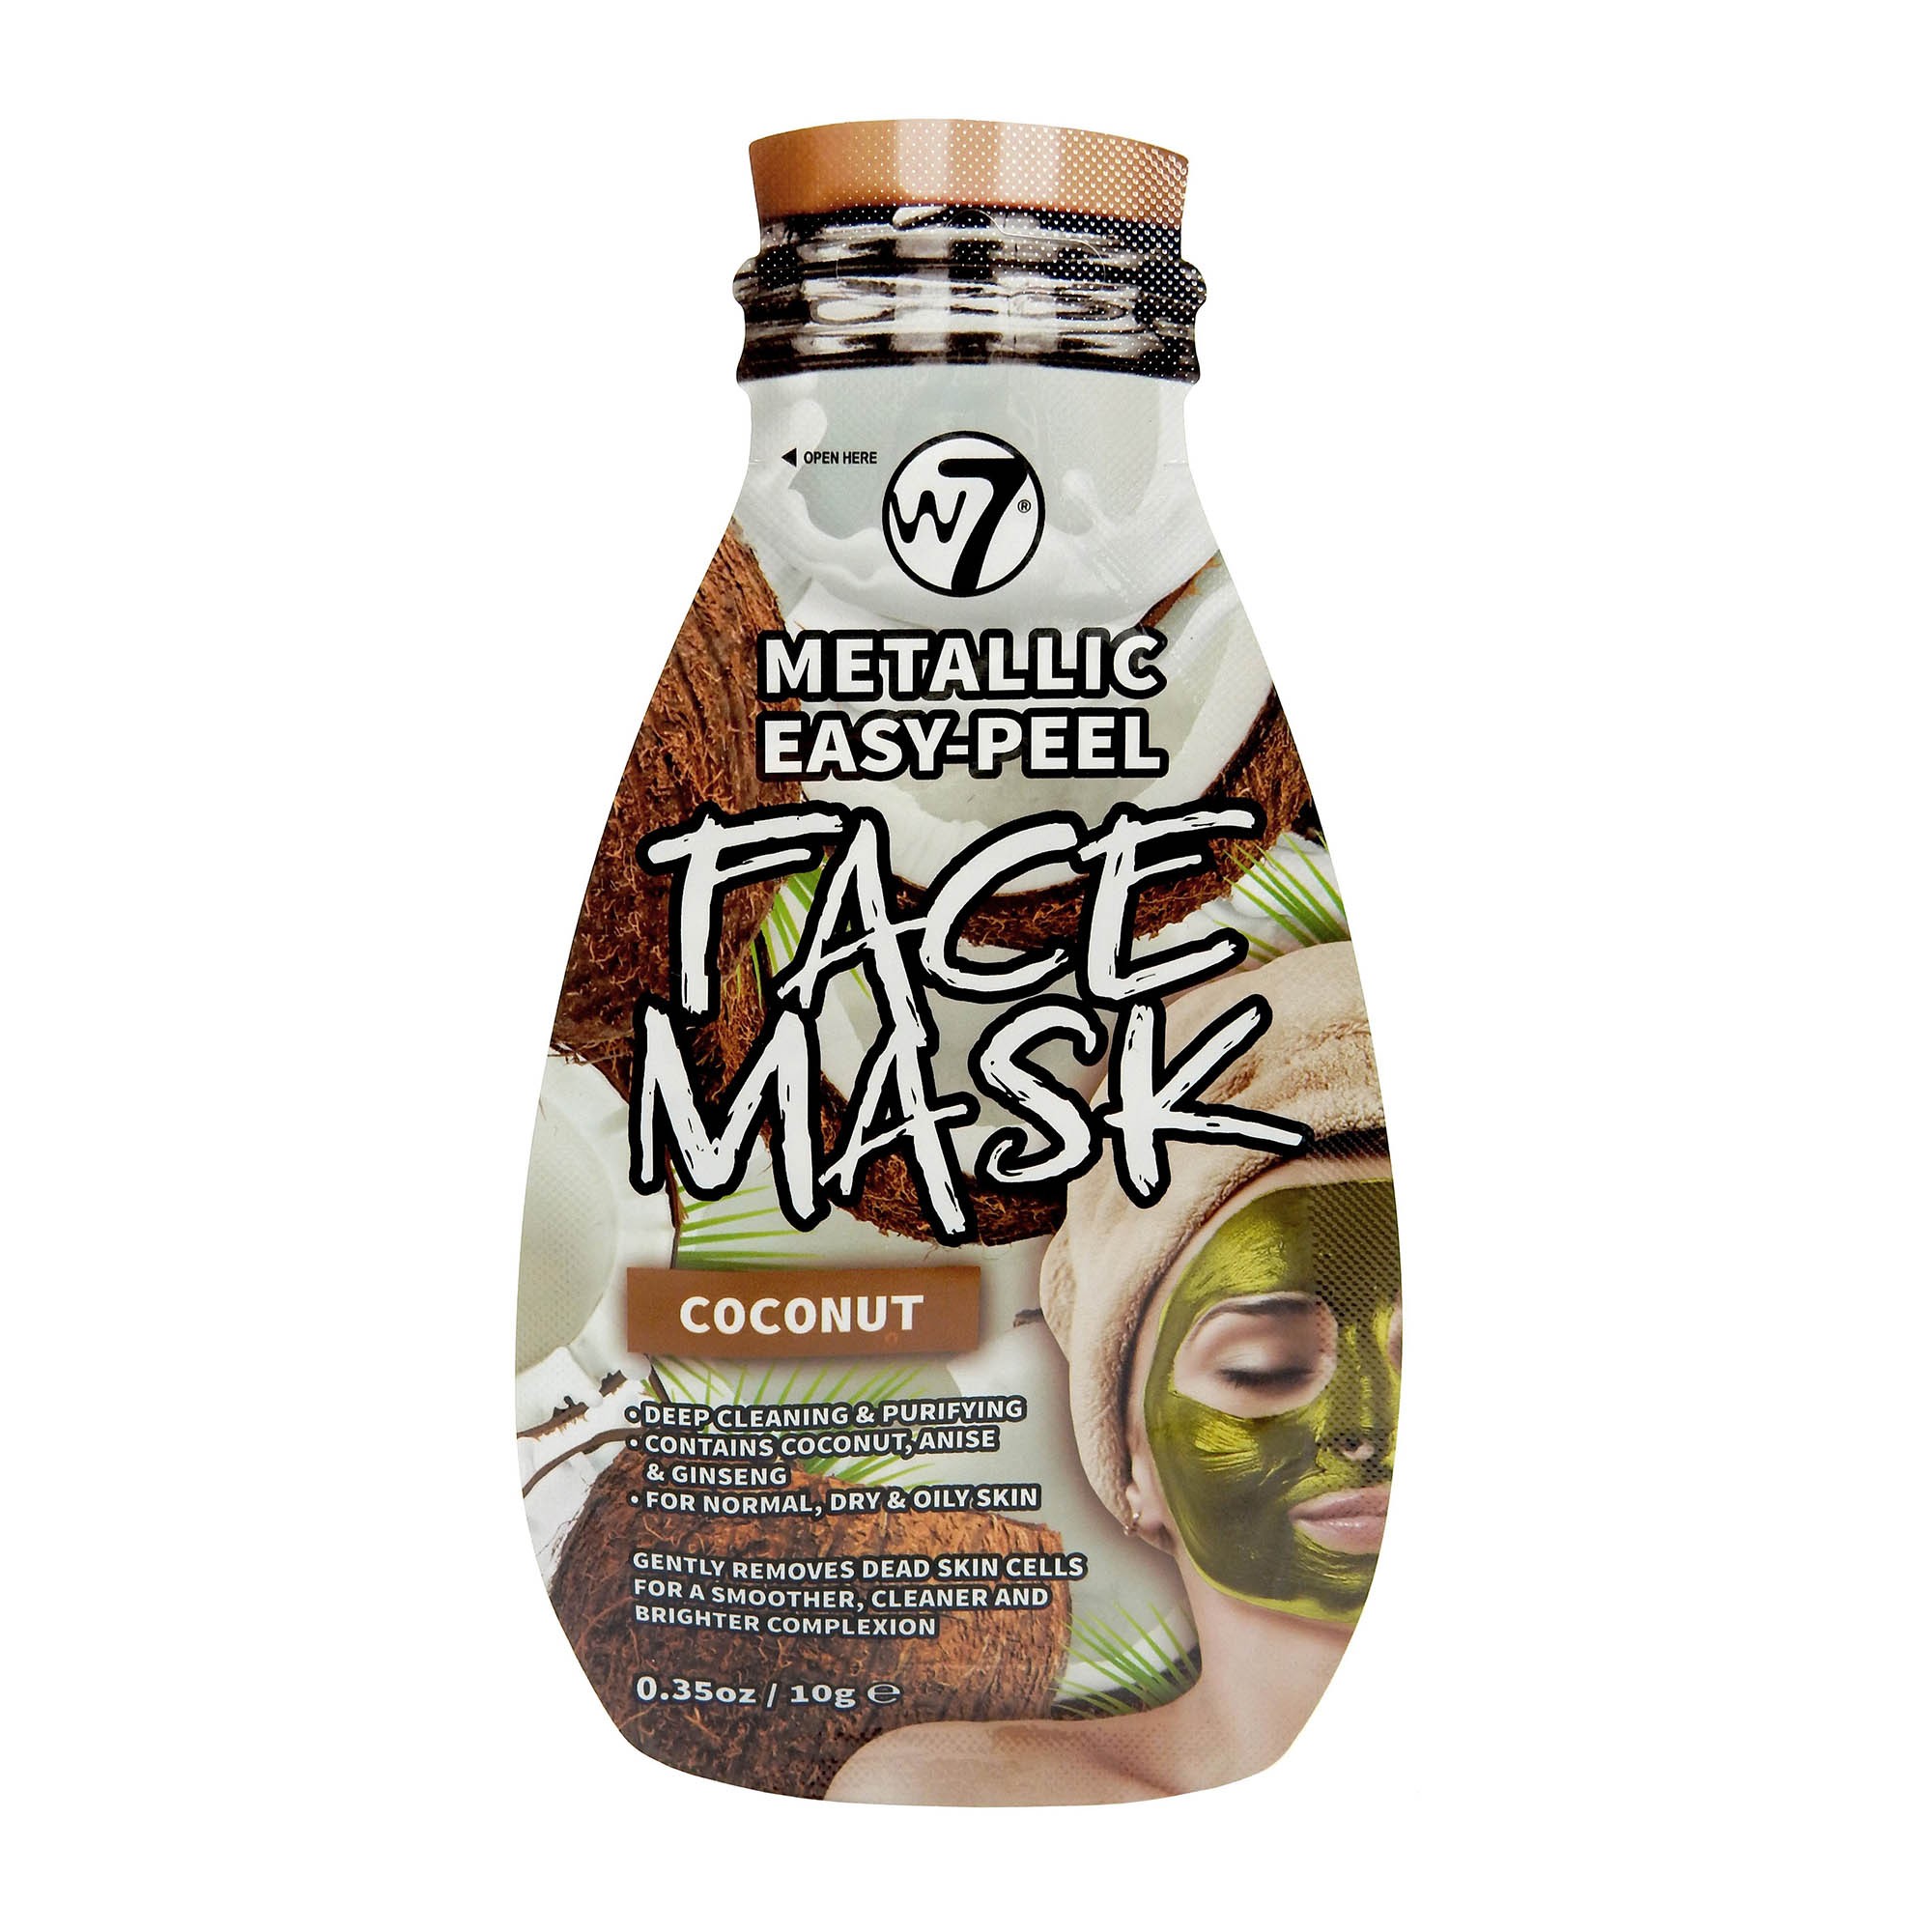 Metallic Easy-Peel Coconut Face Mask